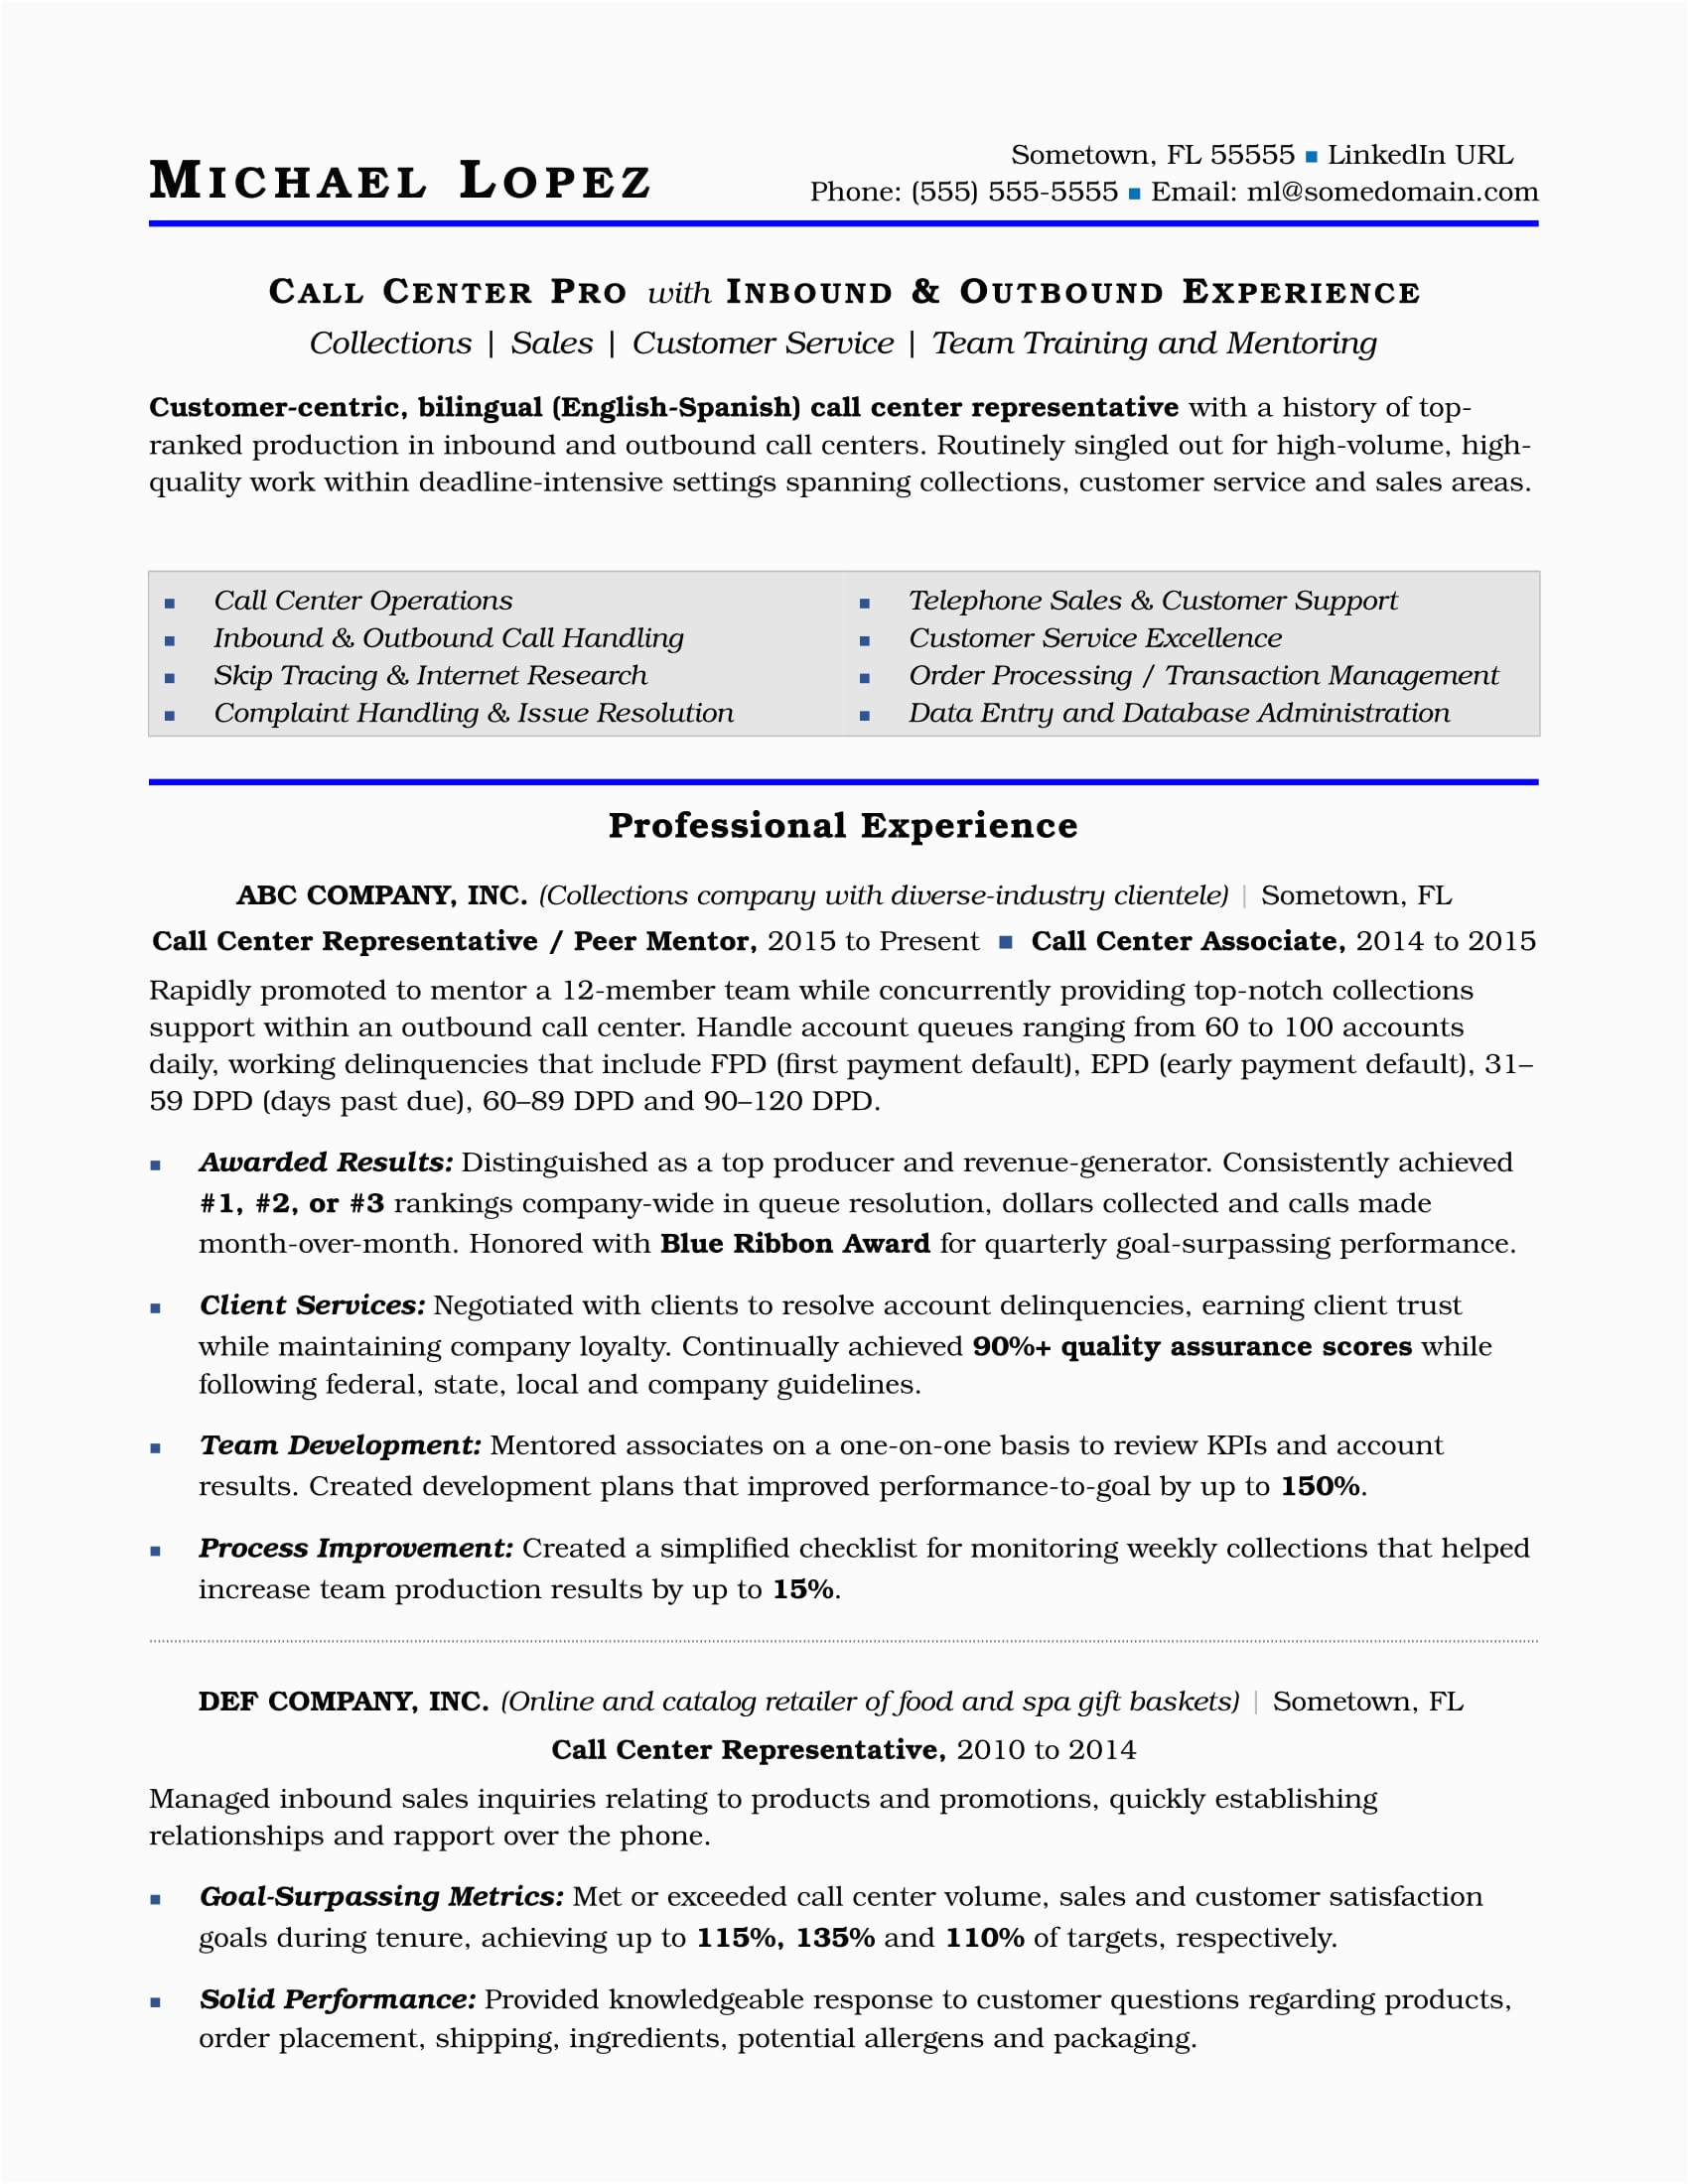 Customer Service Sample Resume for Call Center Call Center Resume Sample